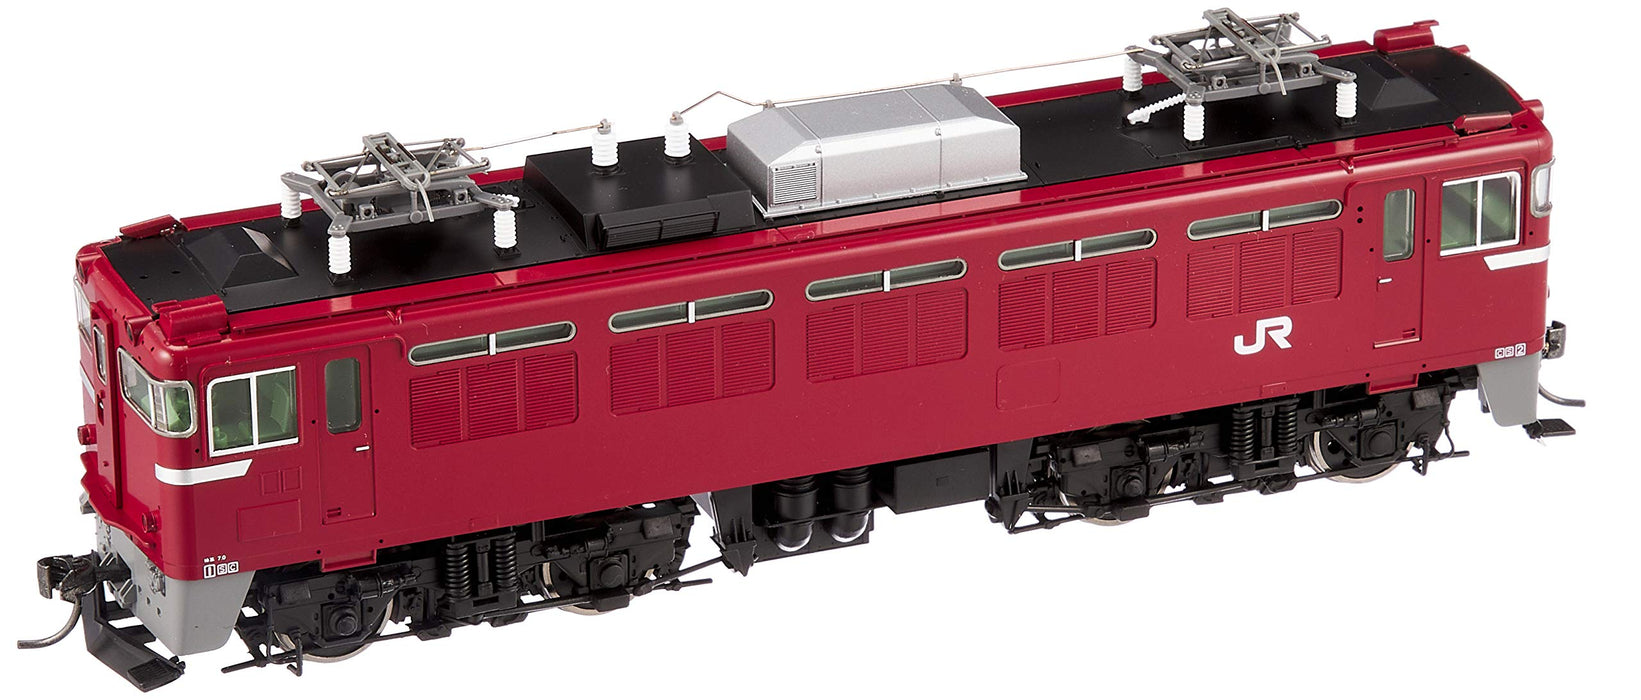 Tomytec Tomix Ho Gauge Gray Electric Locomotive Model ED79-0 - Railway HO-2014